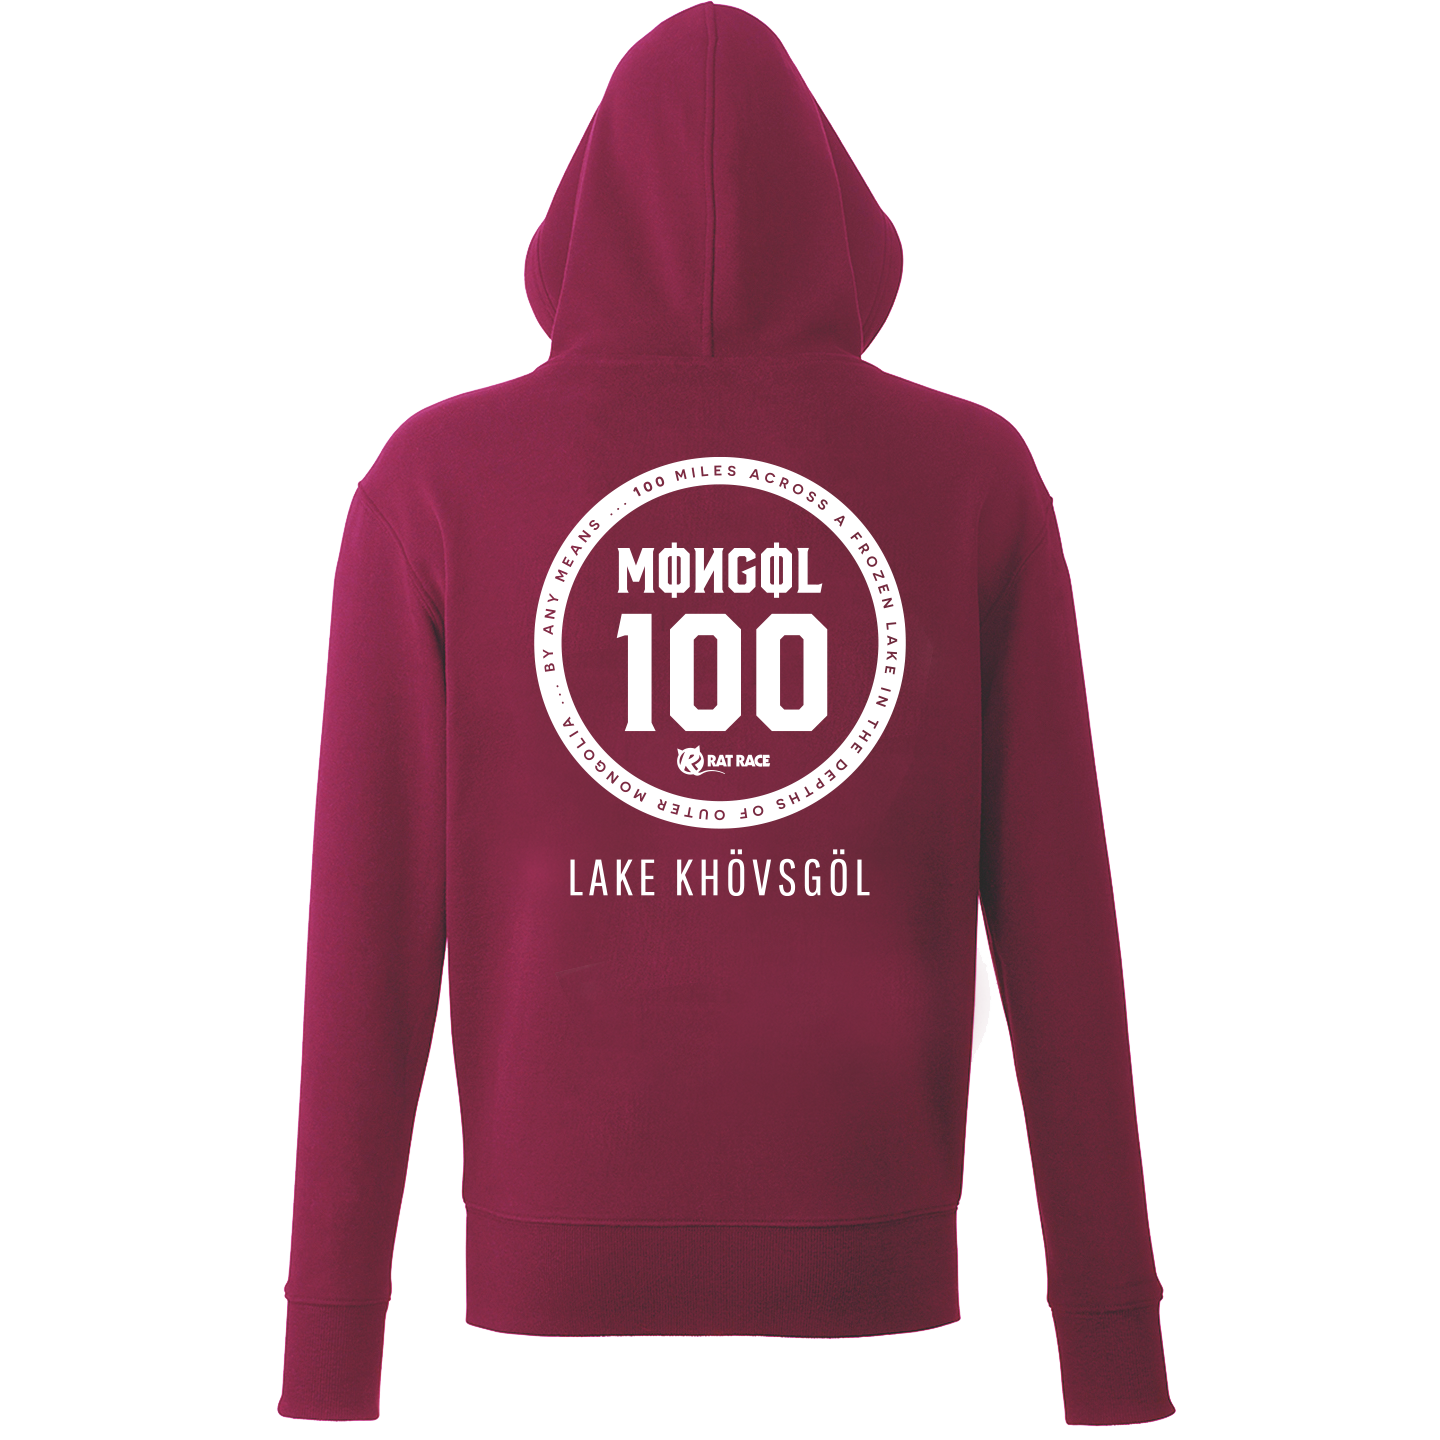 Mongol 100 Hodie - Burgundy